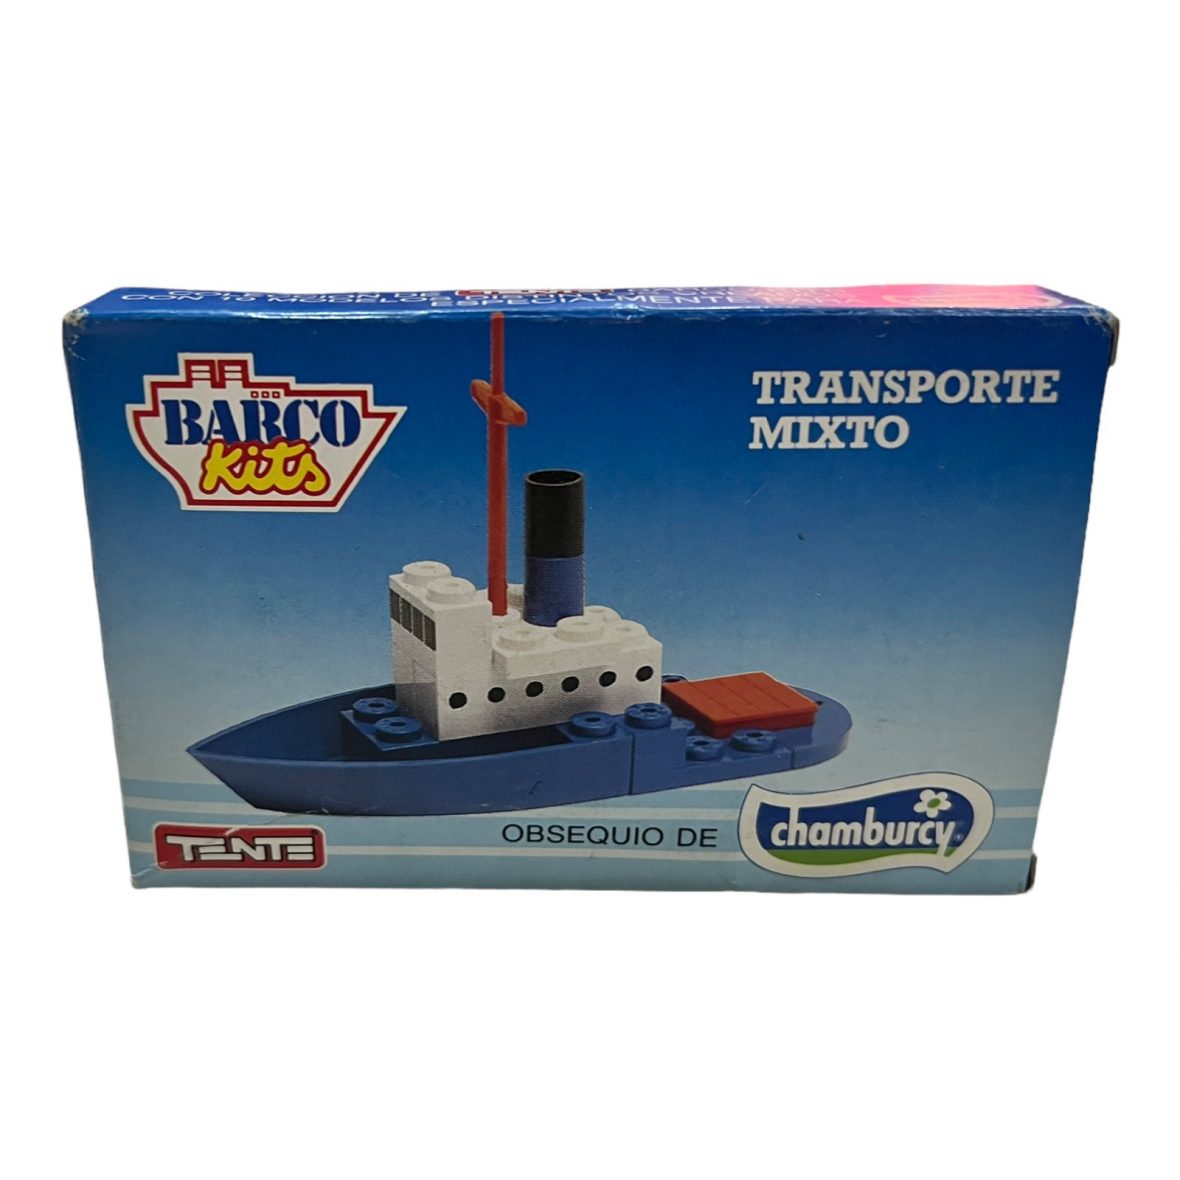 TENTE Barco Kit Transporte 5 Chamburcy Nuevo